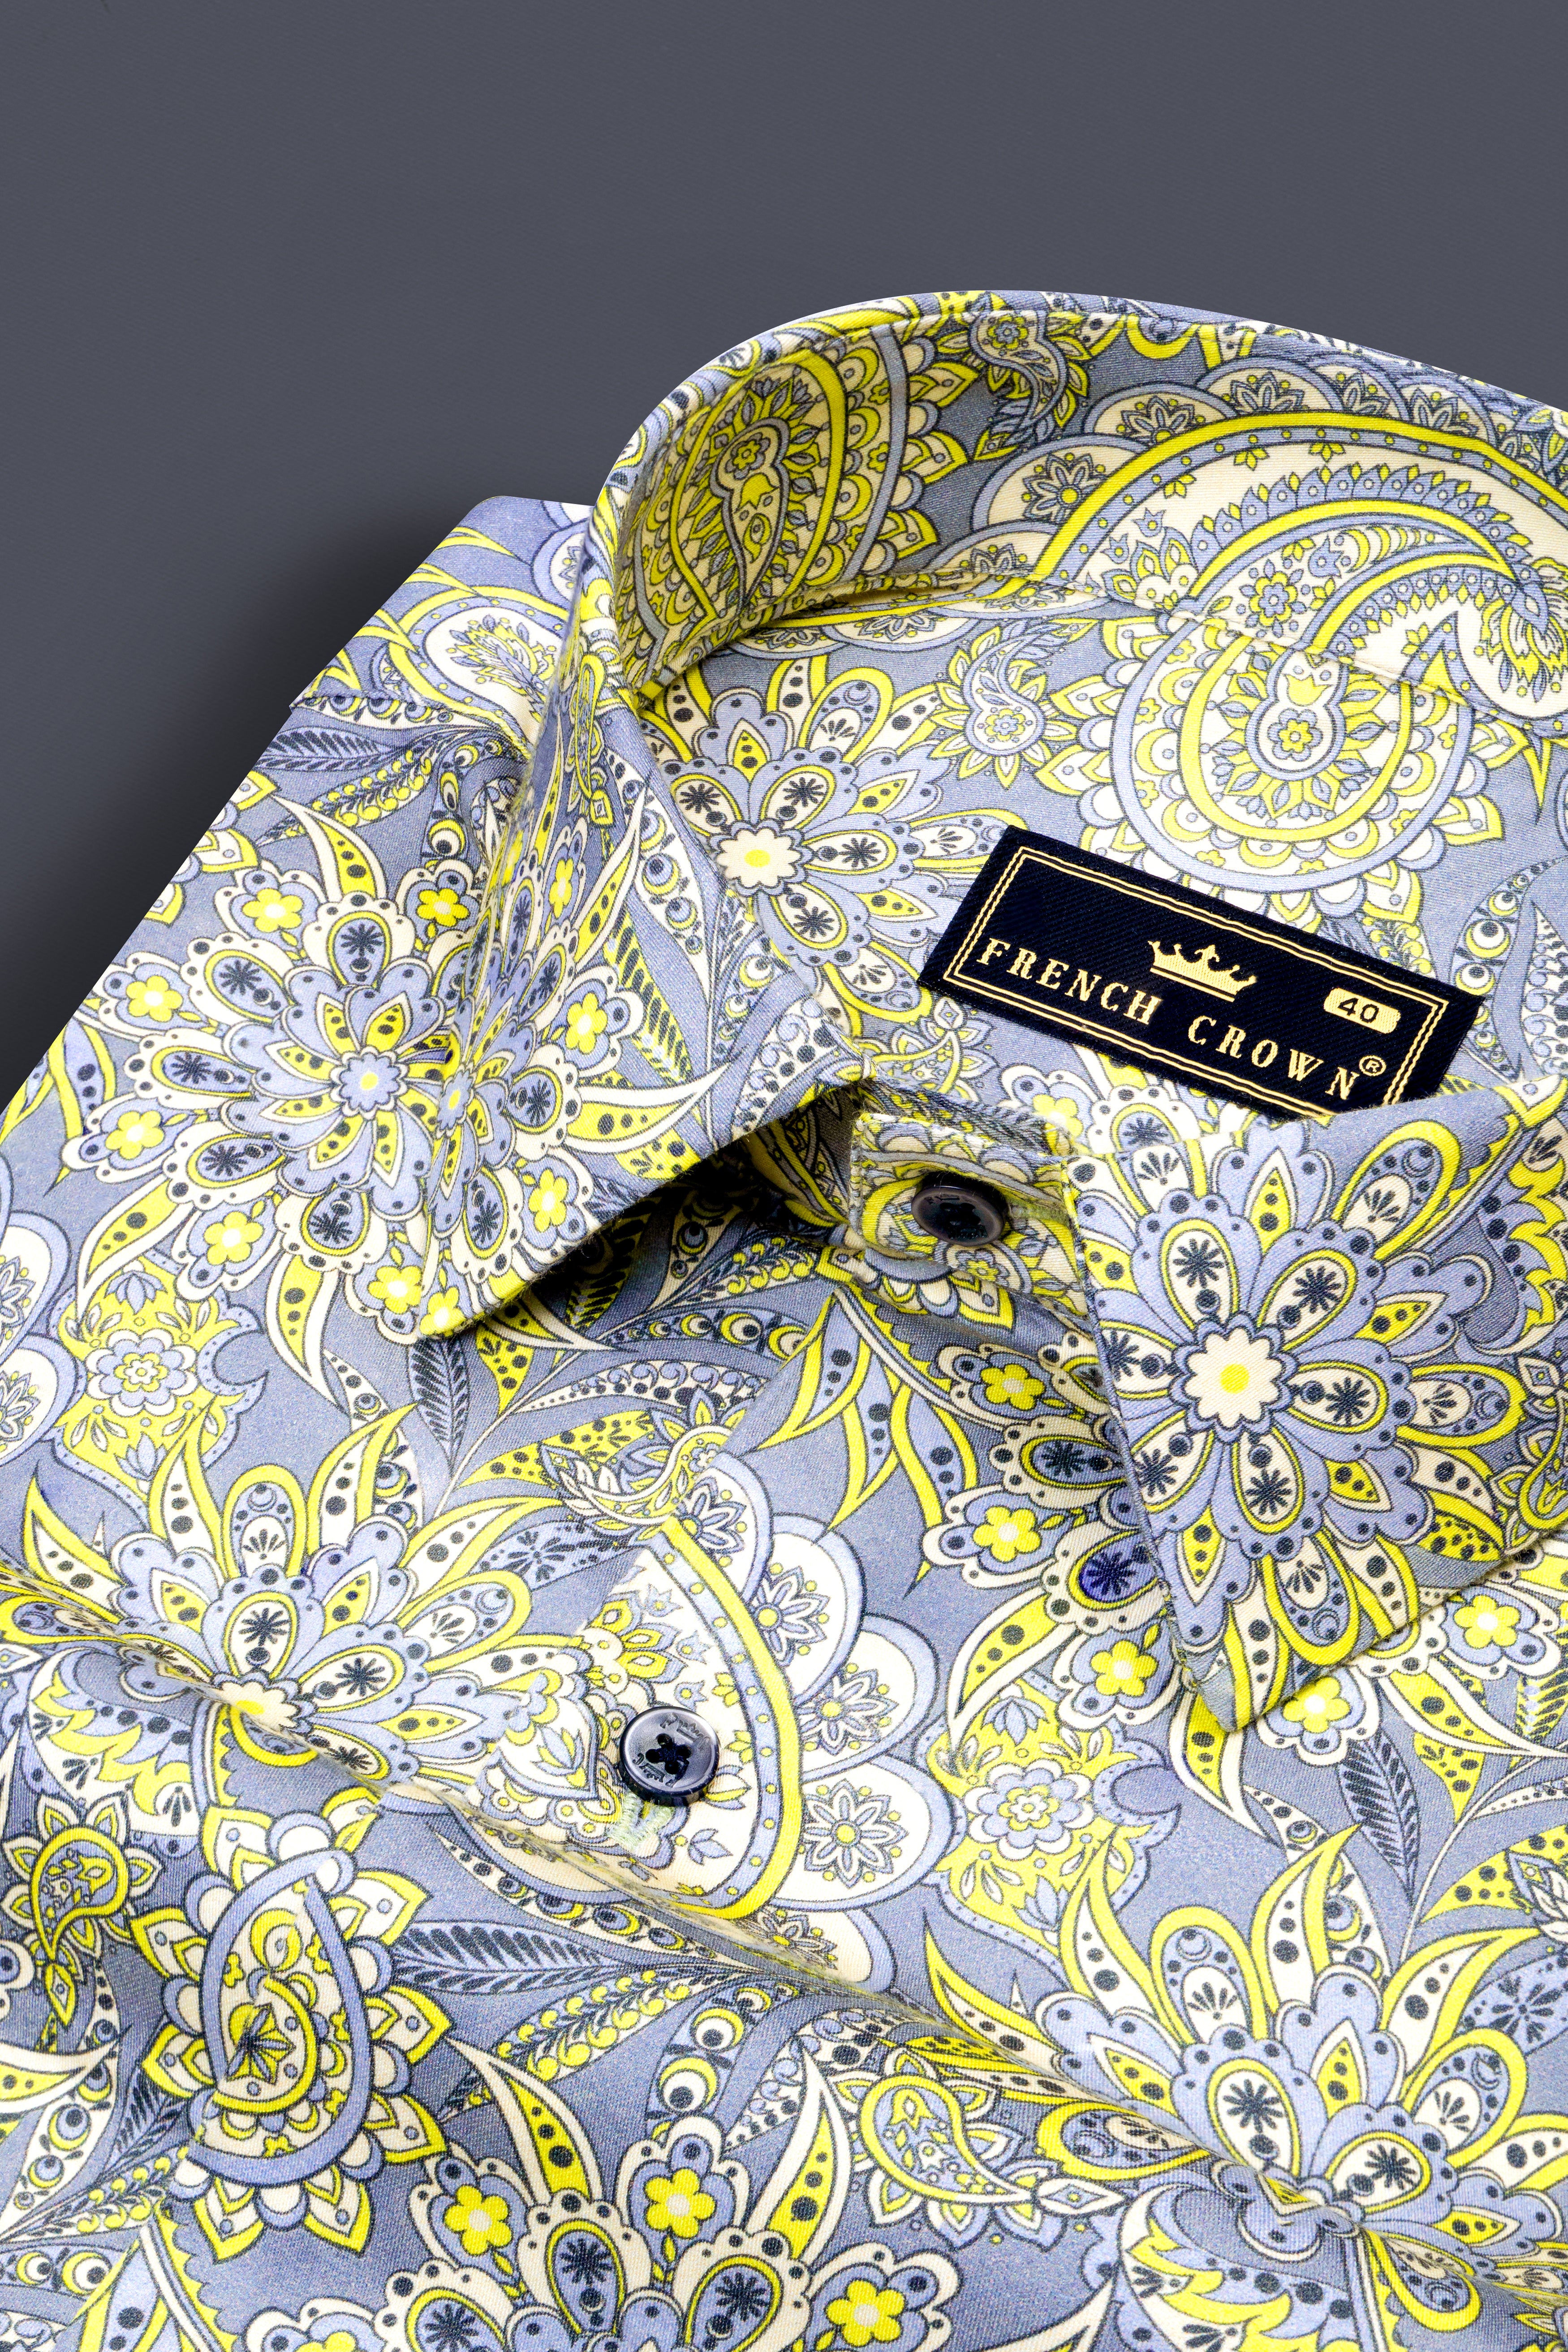 Gull Gray with Wild Rice Green Flower Valley Printed Super Soft Premium Cotton Shirt